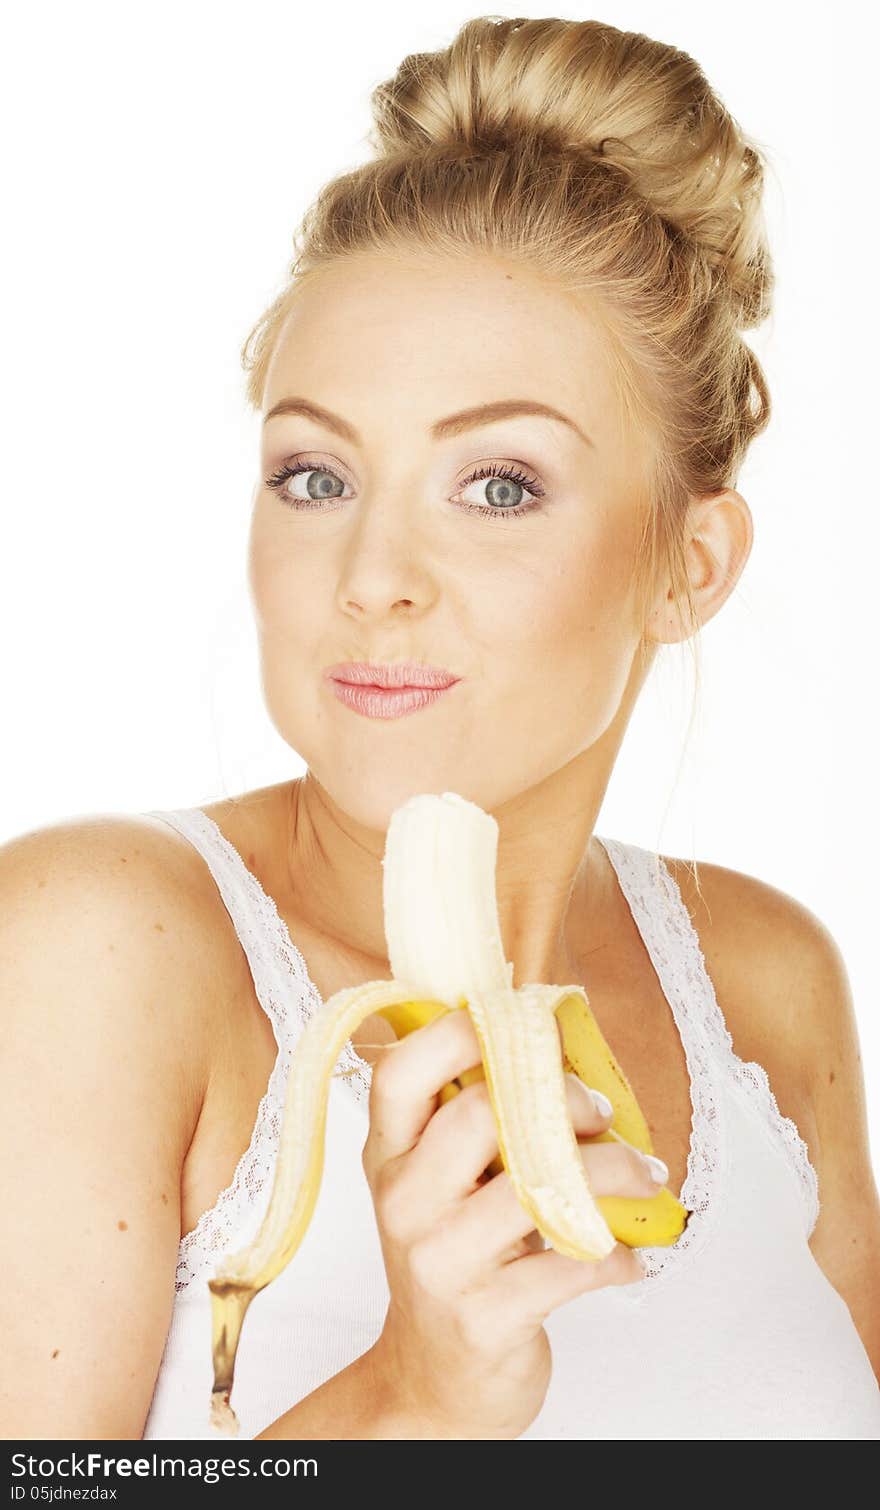 Cute blonde girl eating banana. Cute blonde girl eating banana